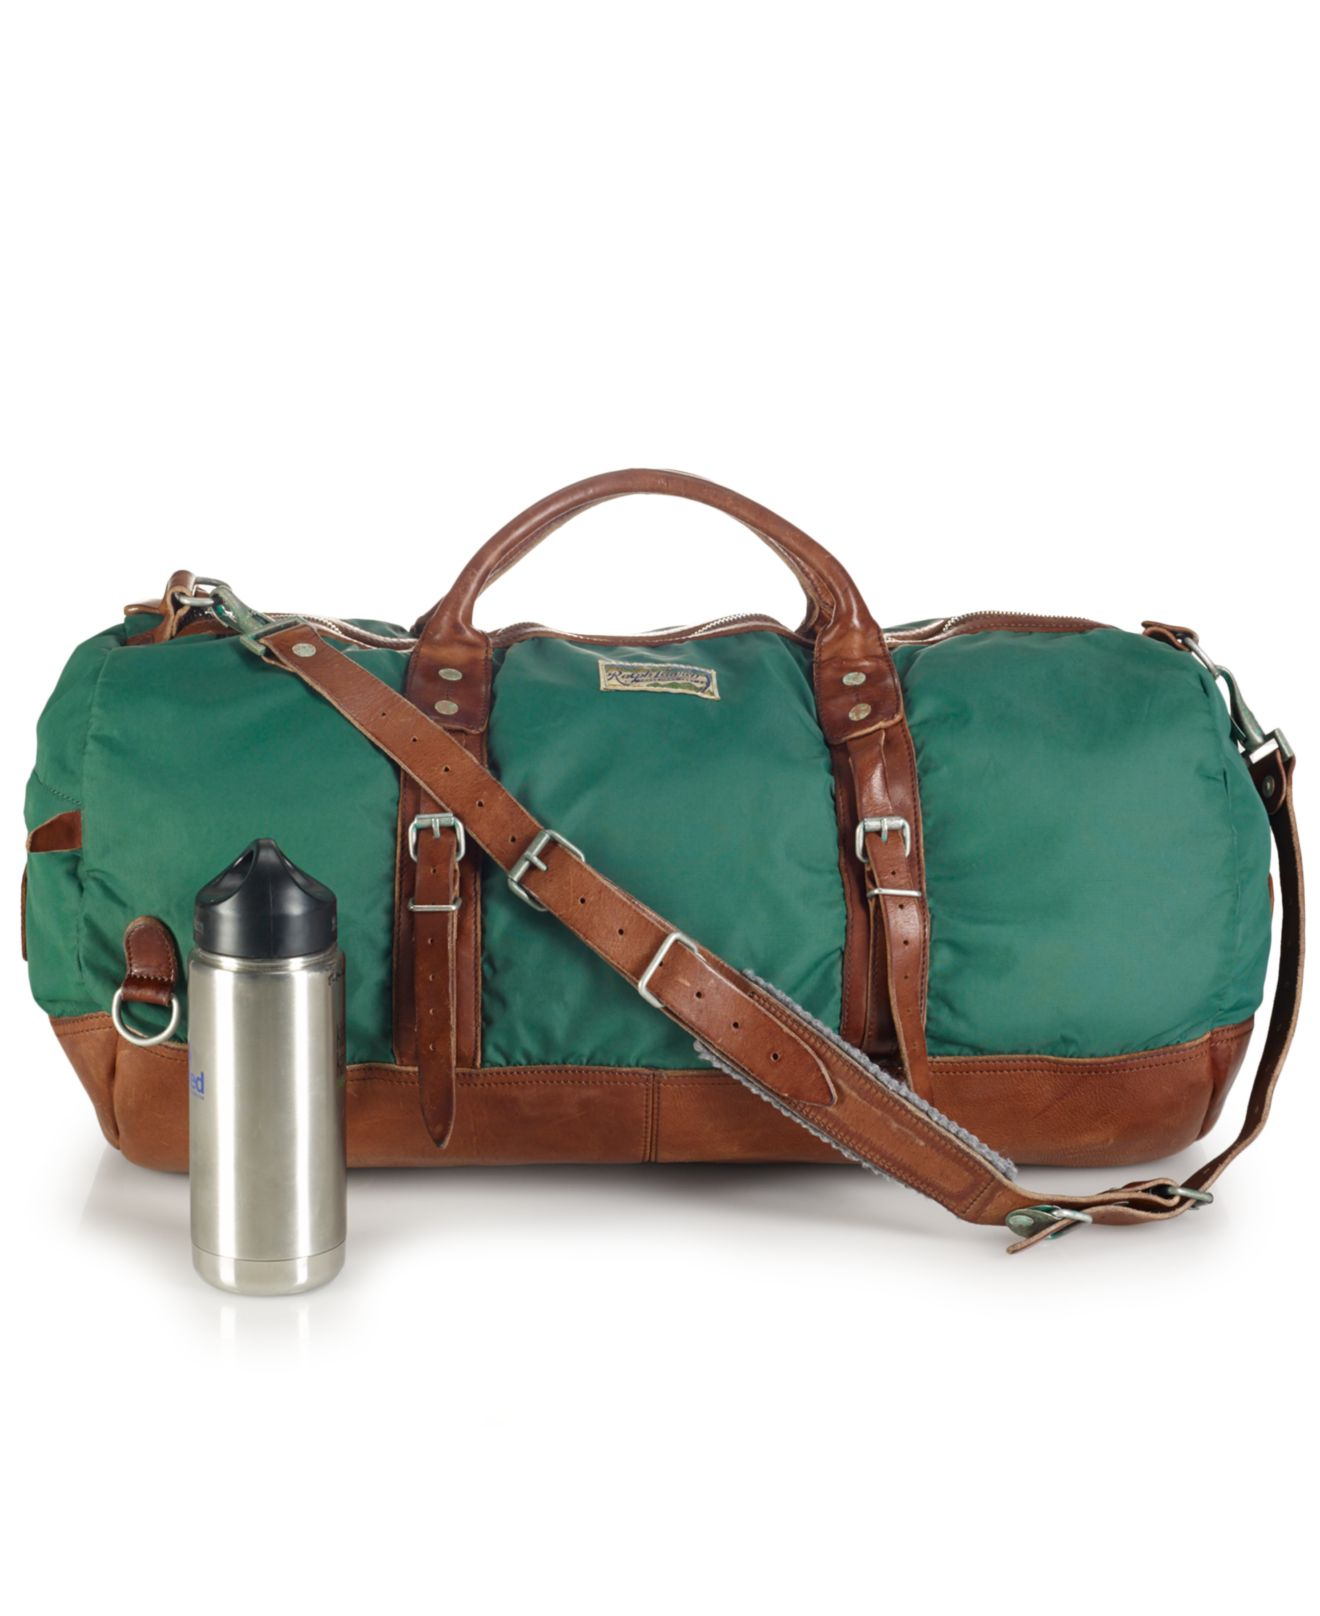 Polo Ralph Lauren Yosemite Nylon Duffle Bag in Green for Men - Lyst